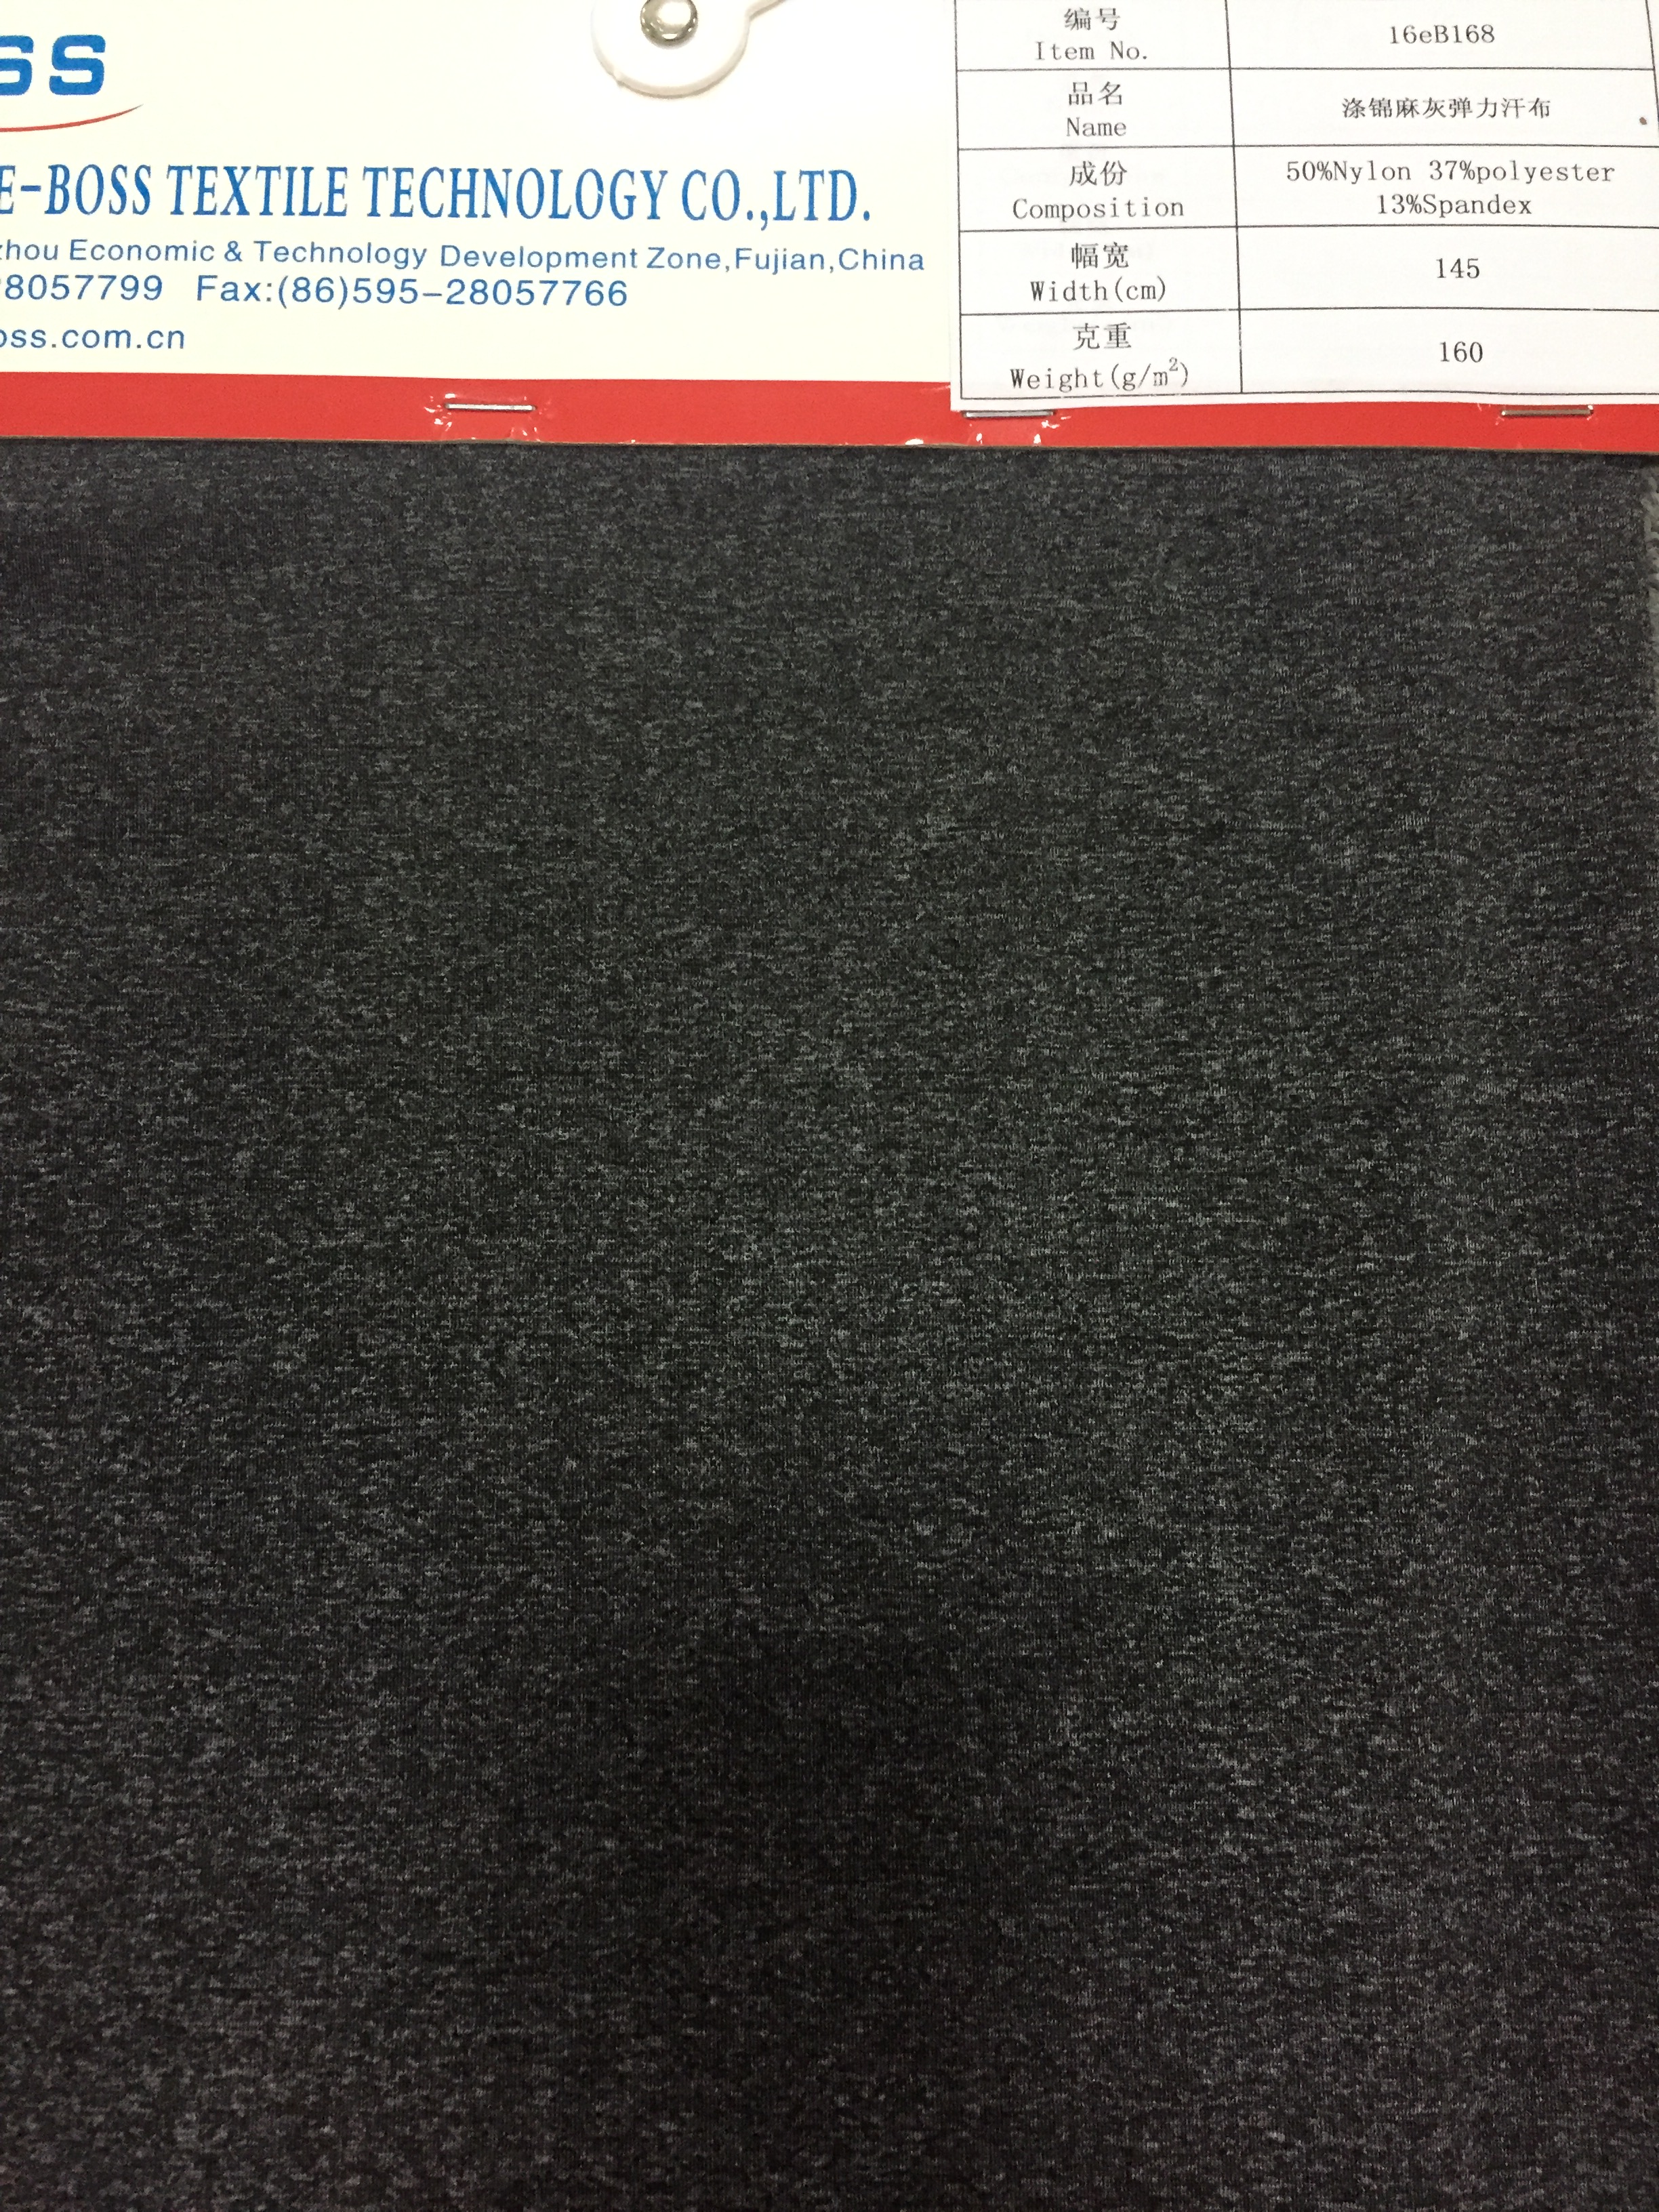 16eB168 50%Nylon 36%Polyester 14%Spandex Melange Jersey 145cm*160gsm for Fitness Sport